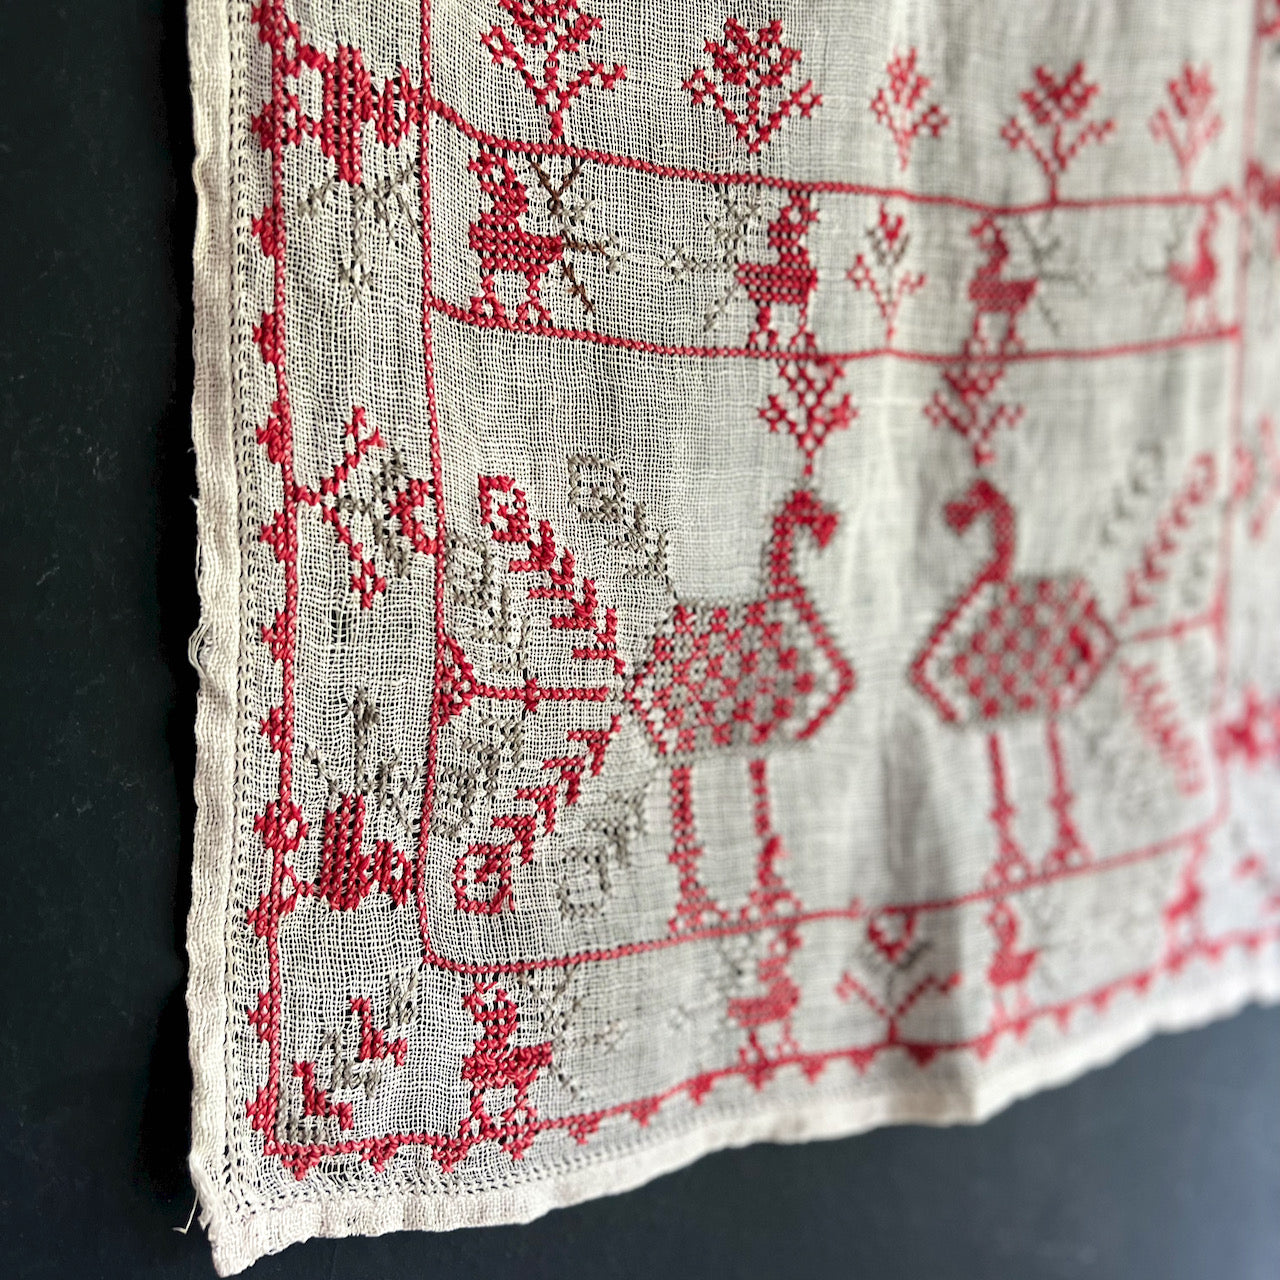 American Antique Needlework Show Towel (1800s)